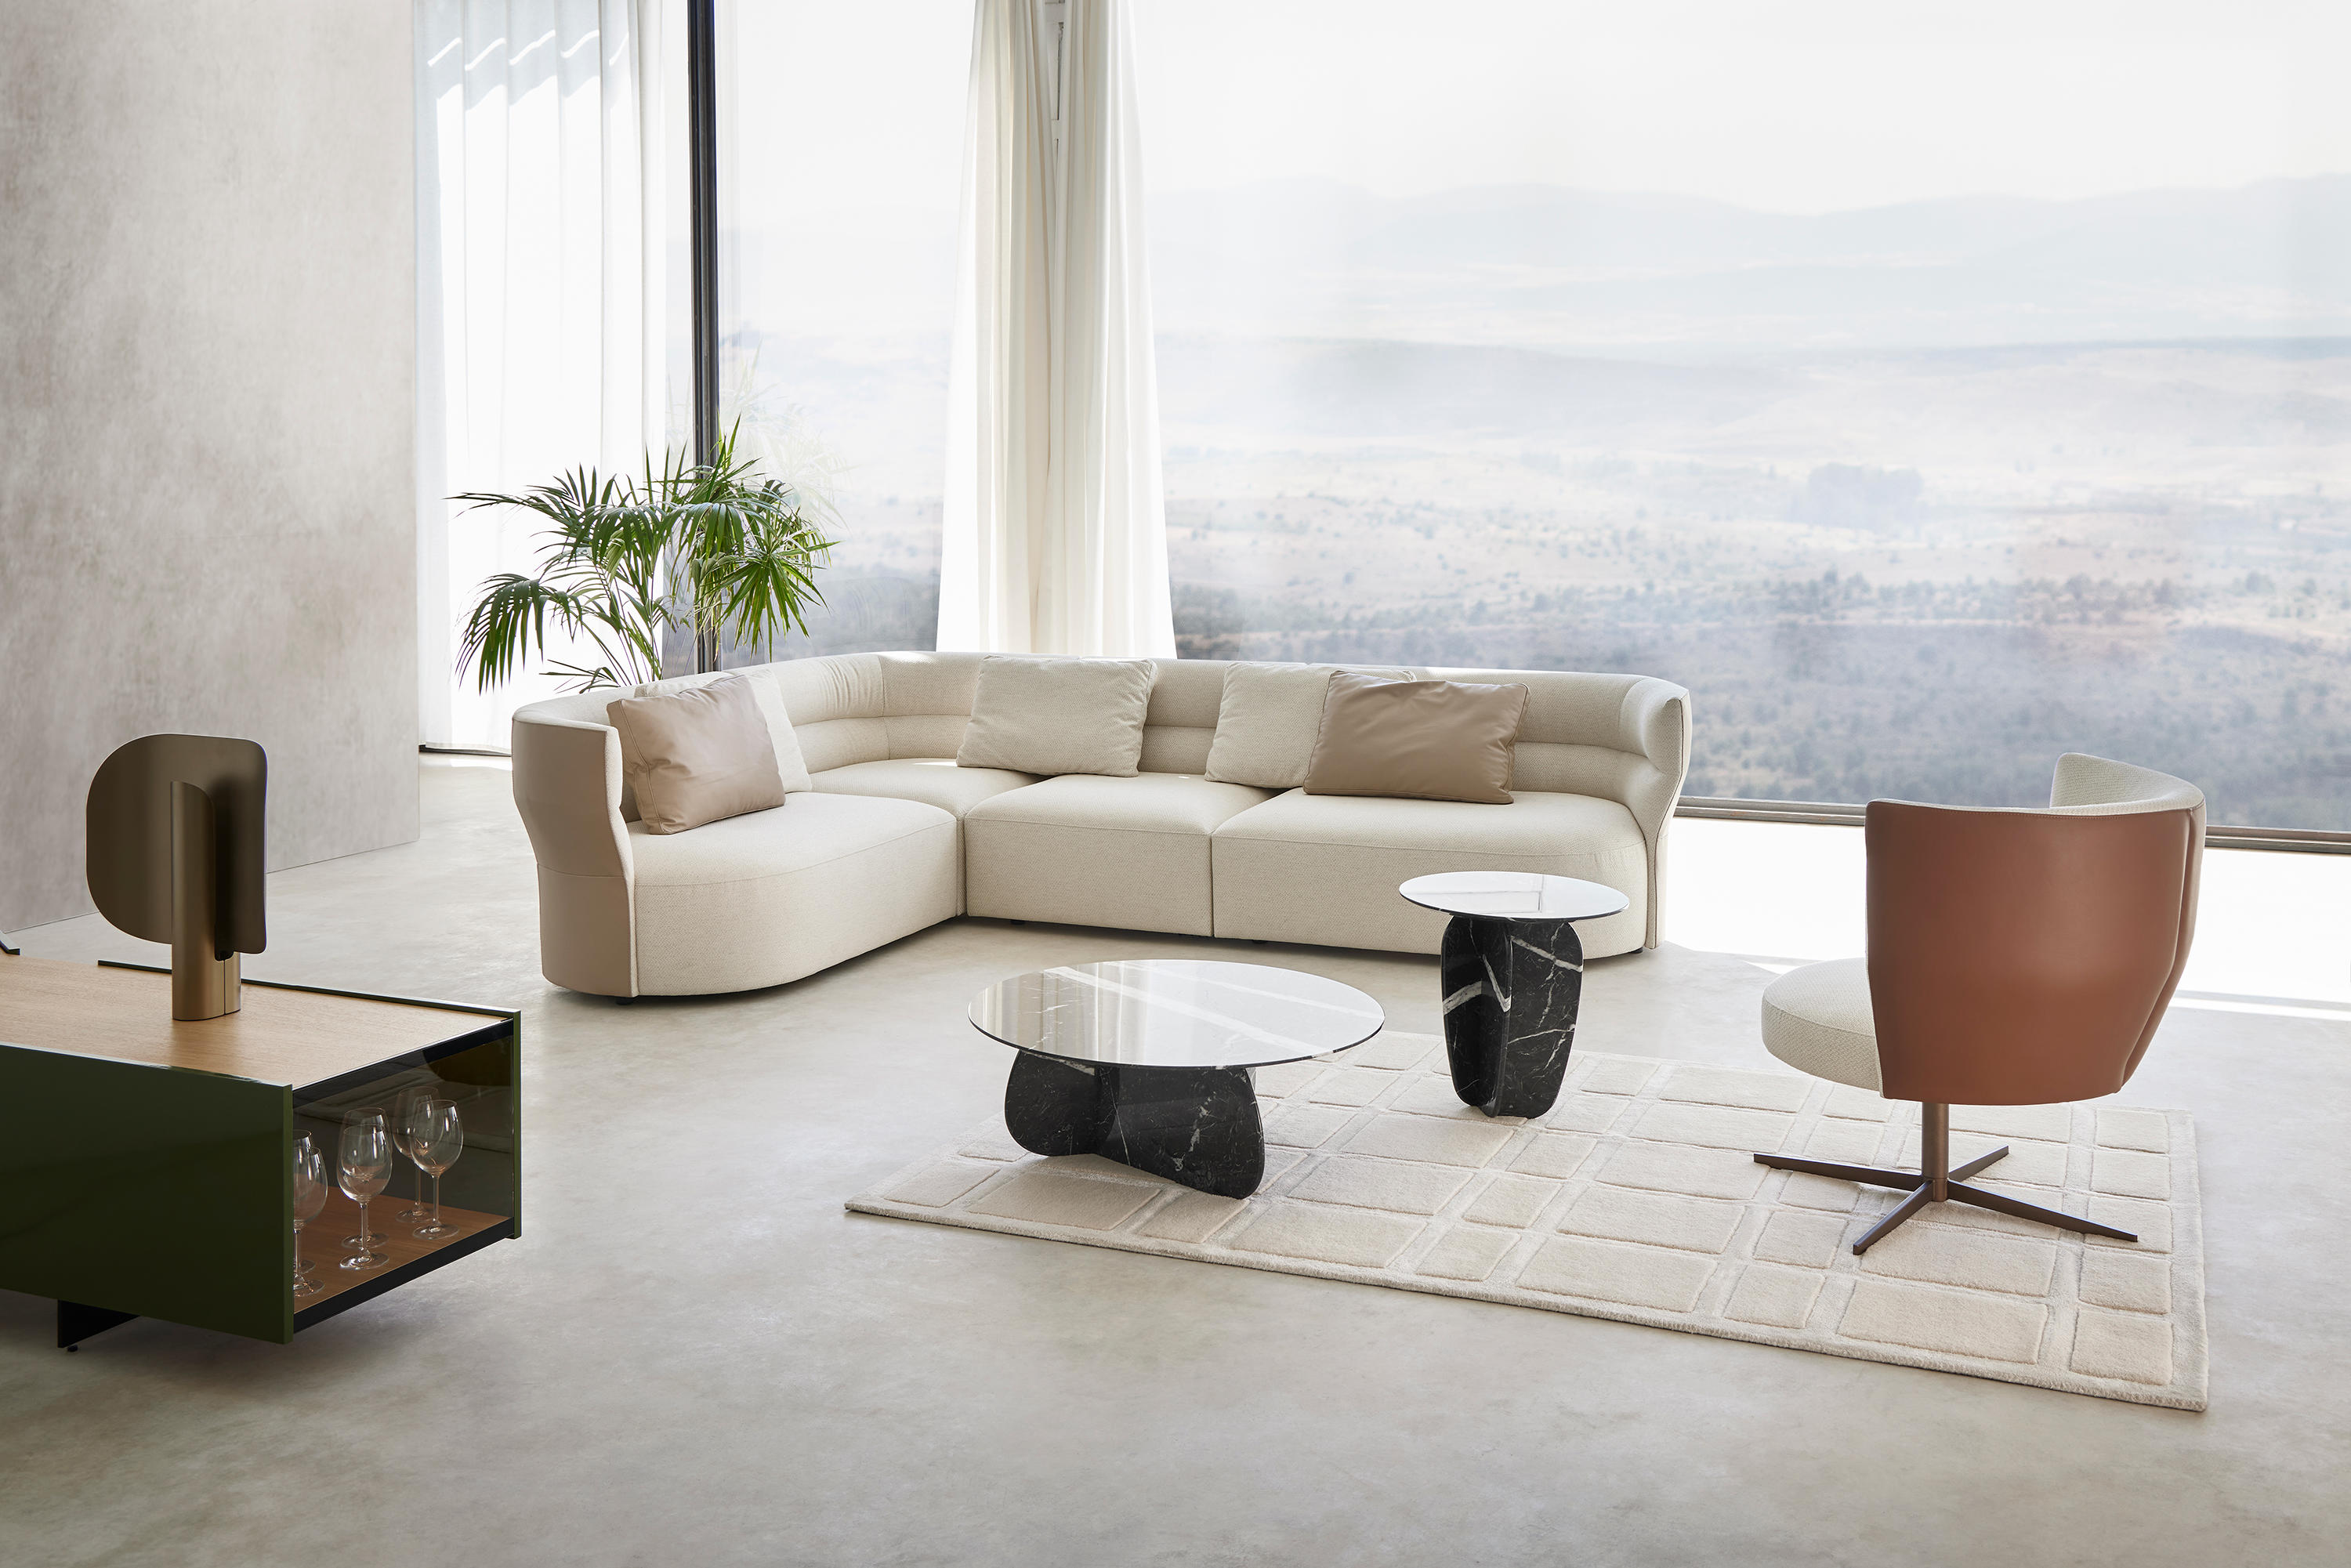 Coral Coffee Table & designer furniture | Architonic